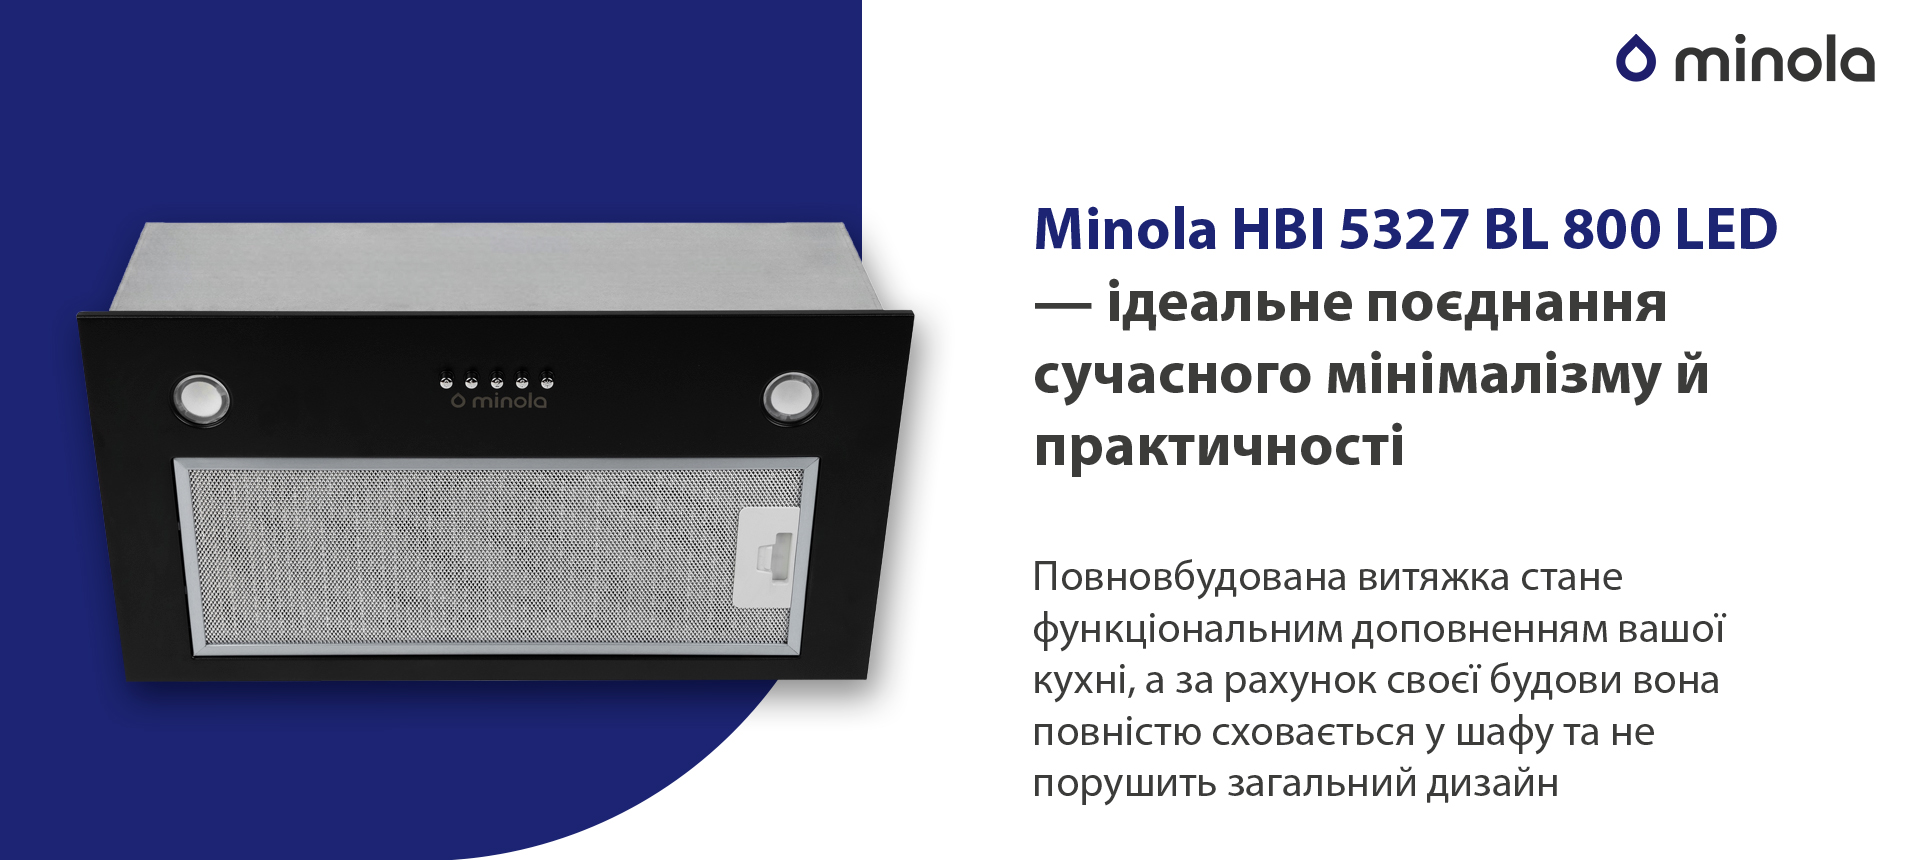 Minola HBI 5327 BL 800 LED в магазине в Киеве - фото 10